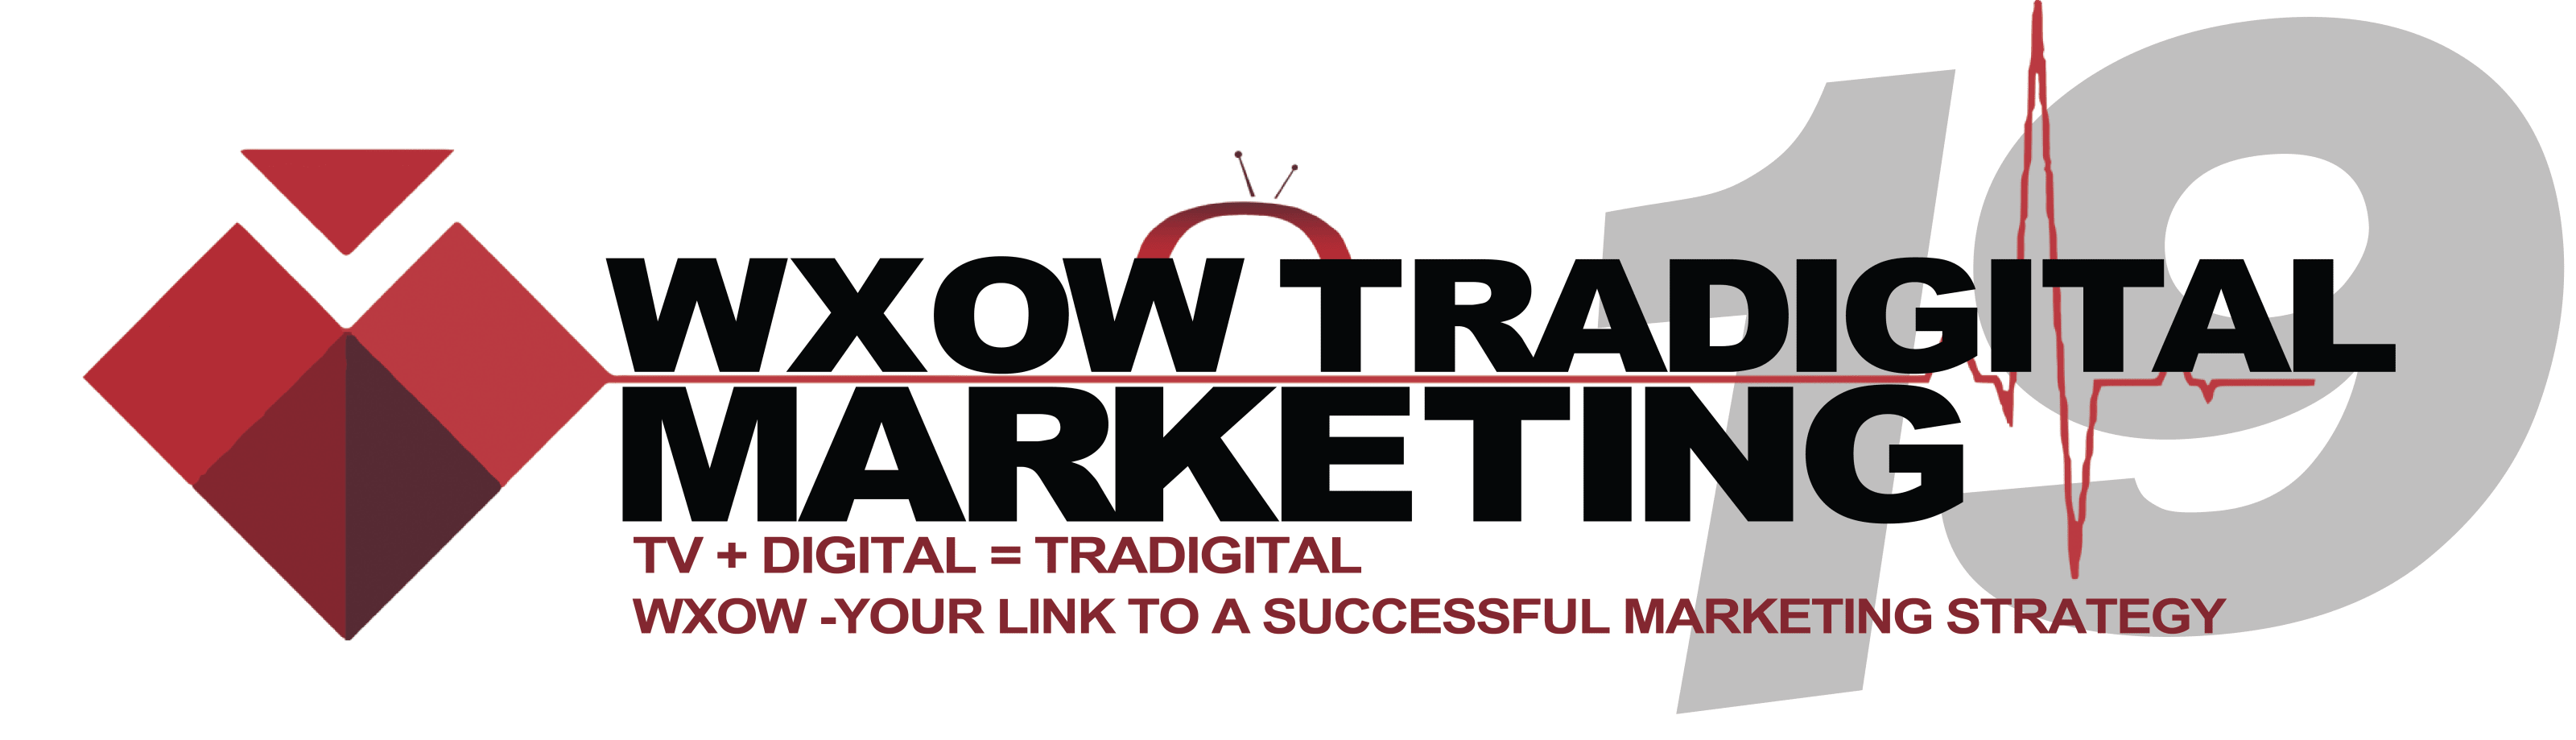 WXOW’s Tradigital Marketing Seminar